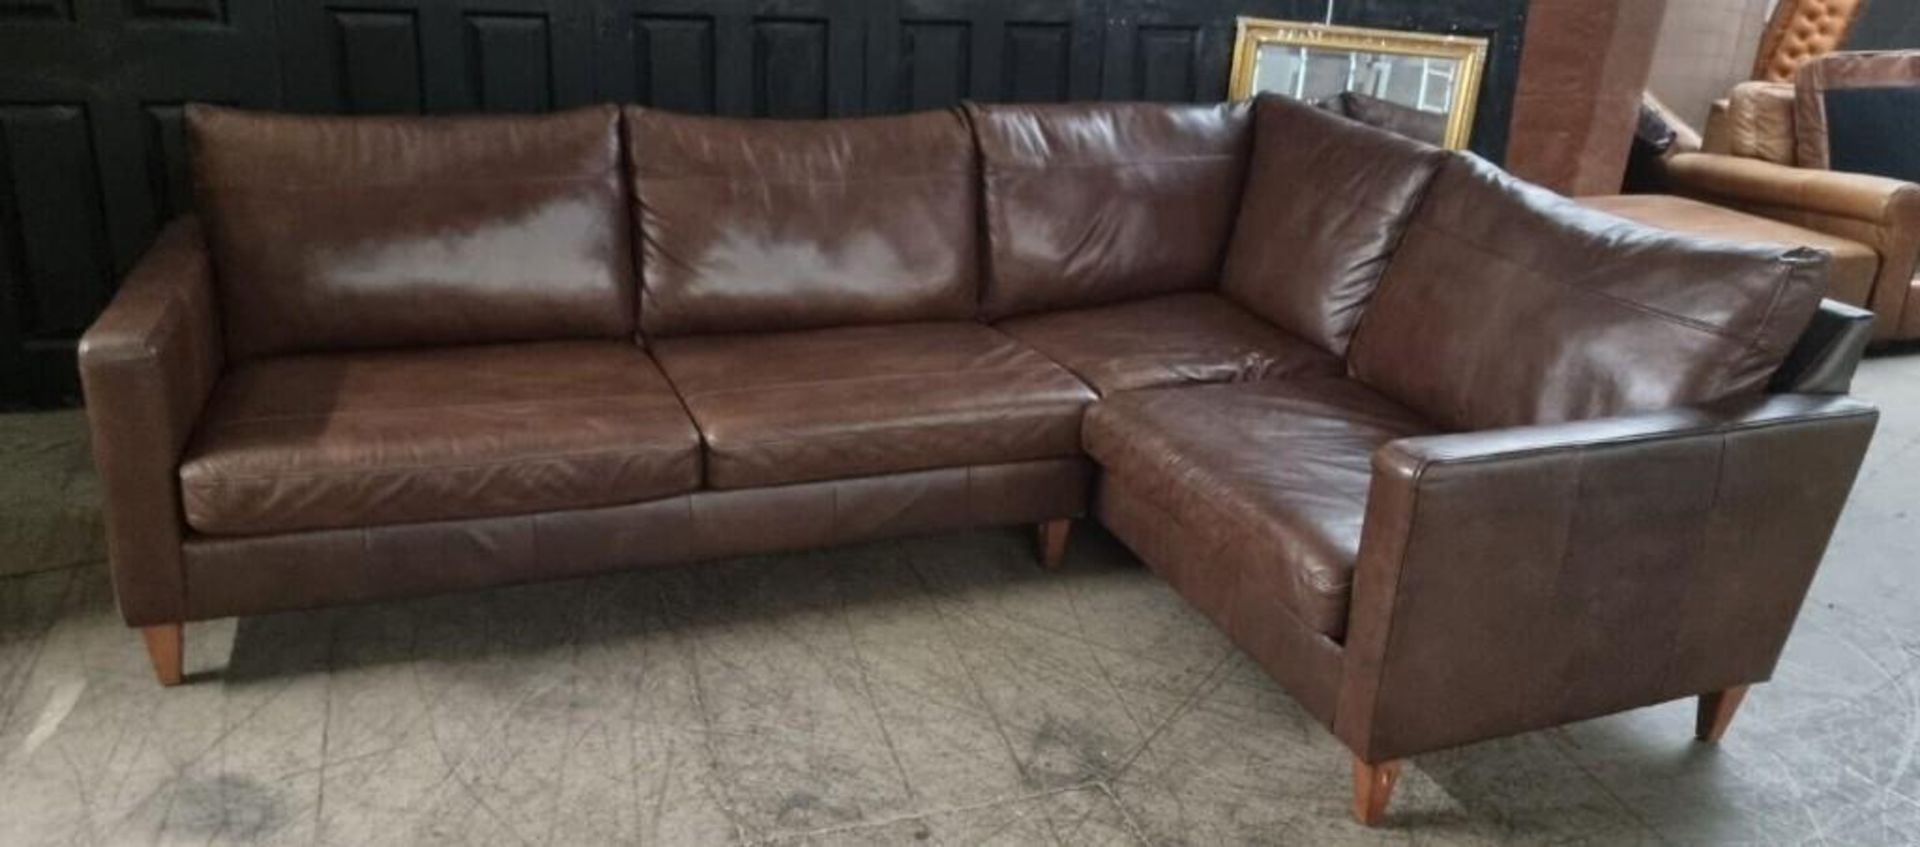 Brand New John Lewis 100% leather Bailey corner sofa in Chestnut Brown